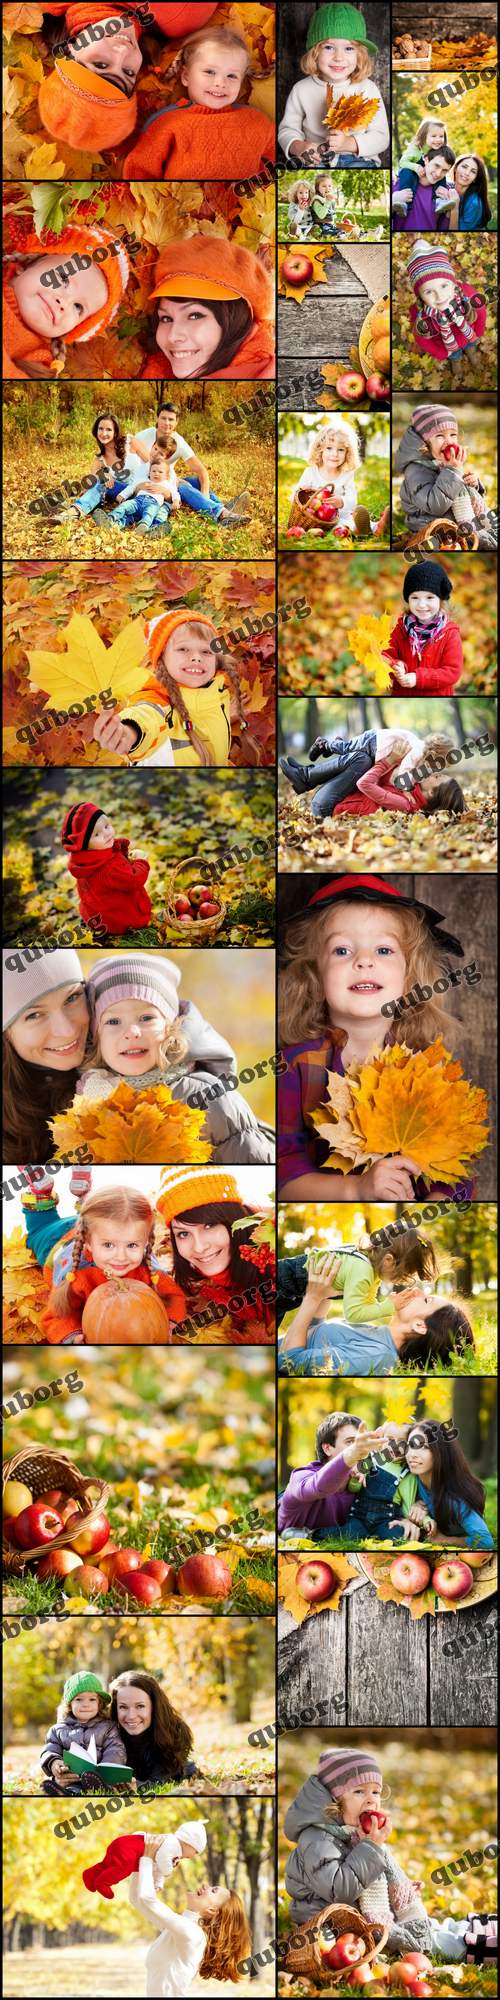 Stock Photos - Autumn and Family